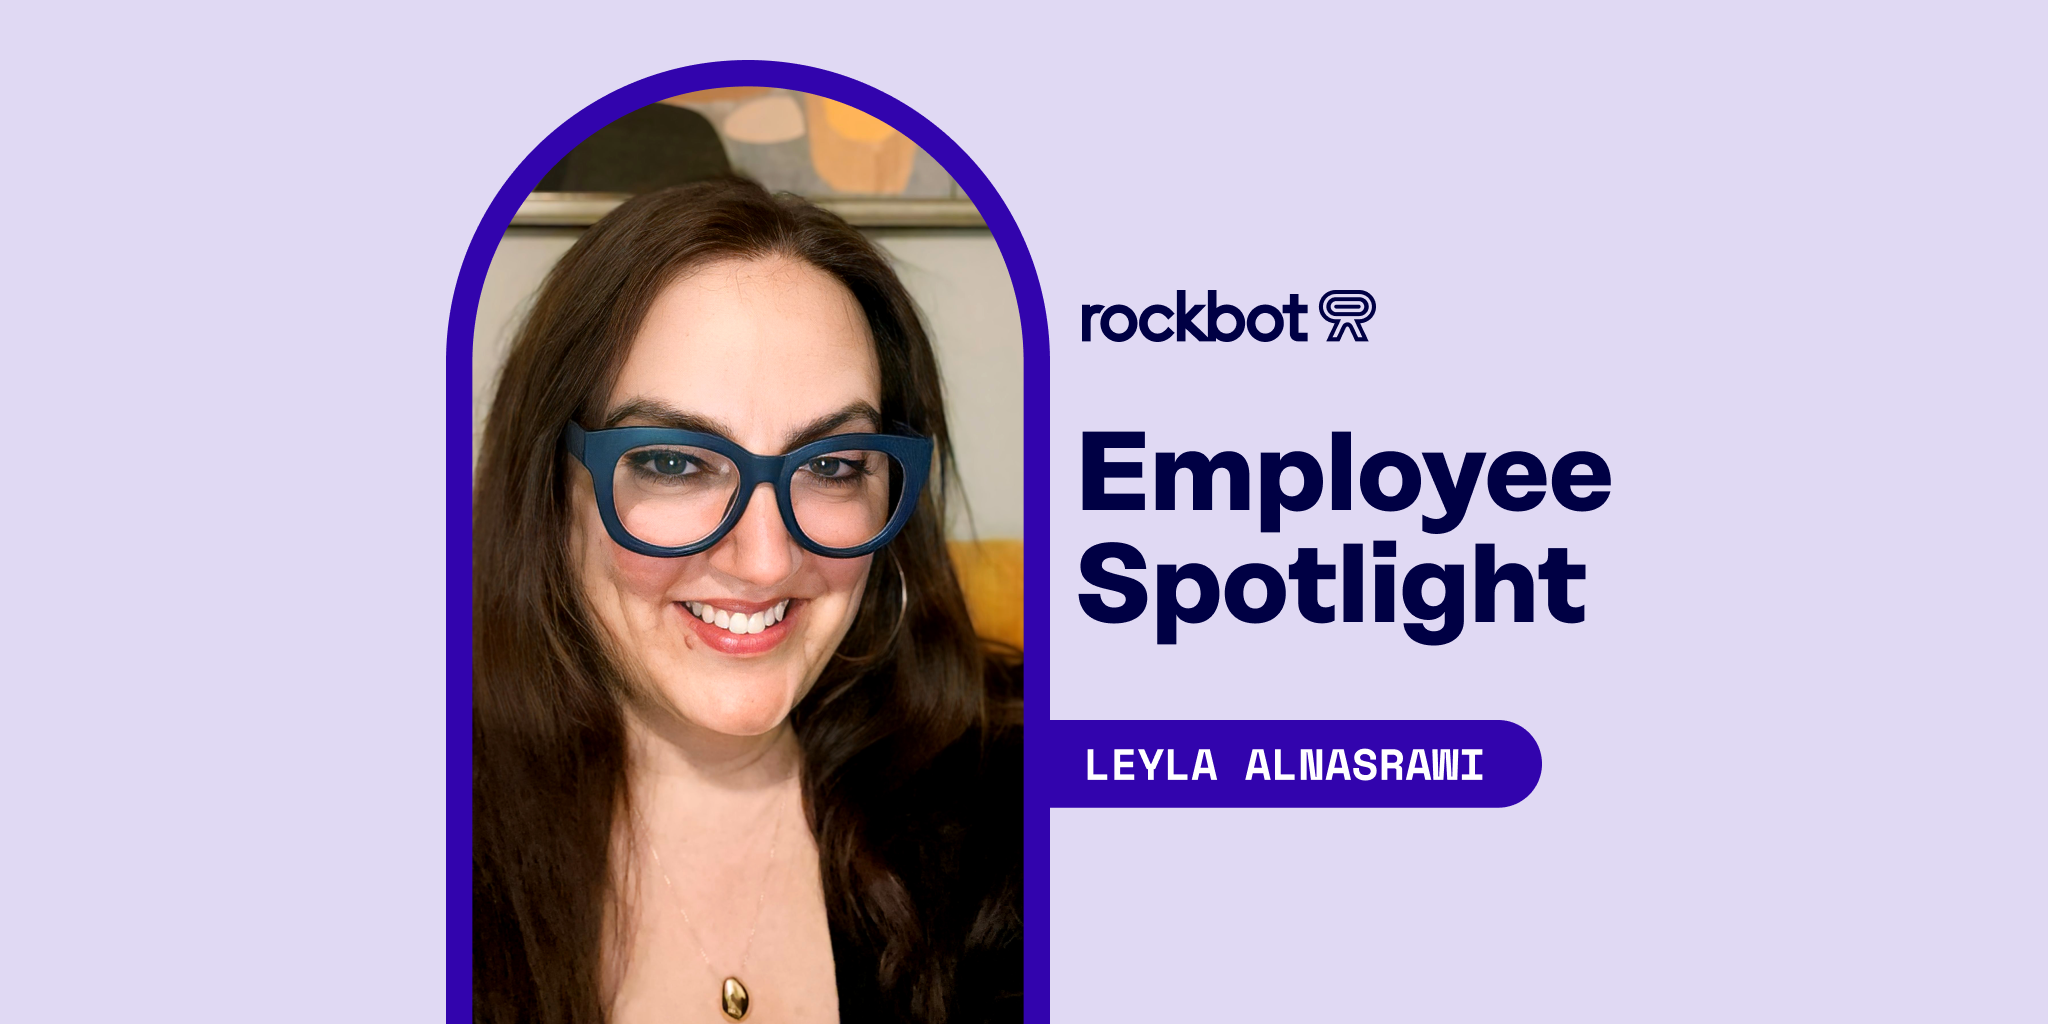 Rockbot Employee Spotlight: Leyla Alnasrawi, Director, Customer Support